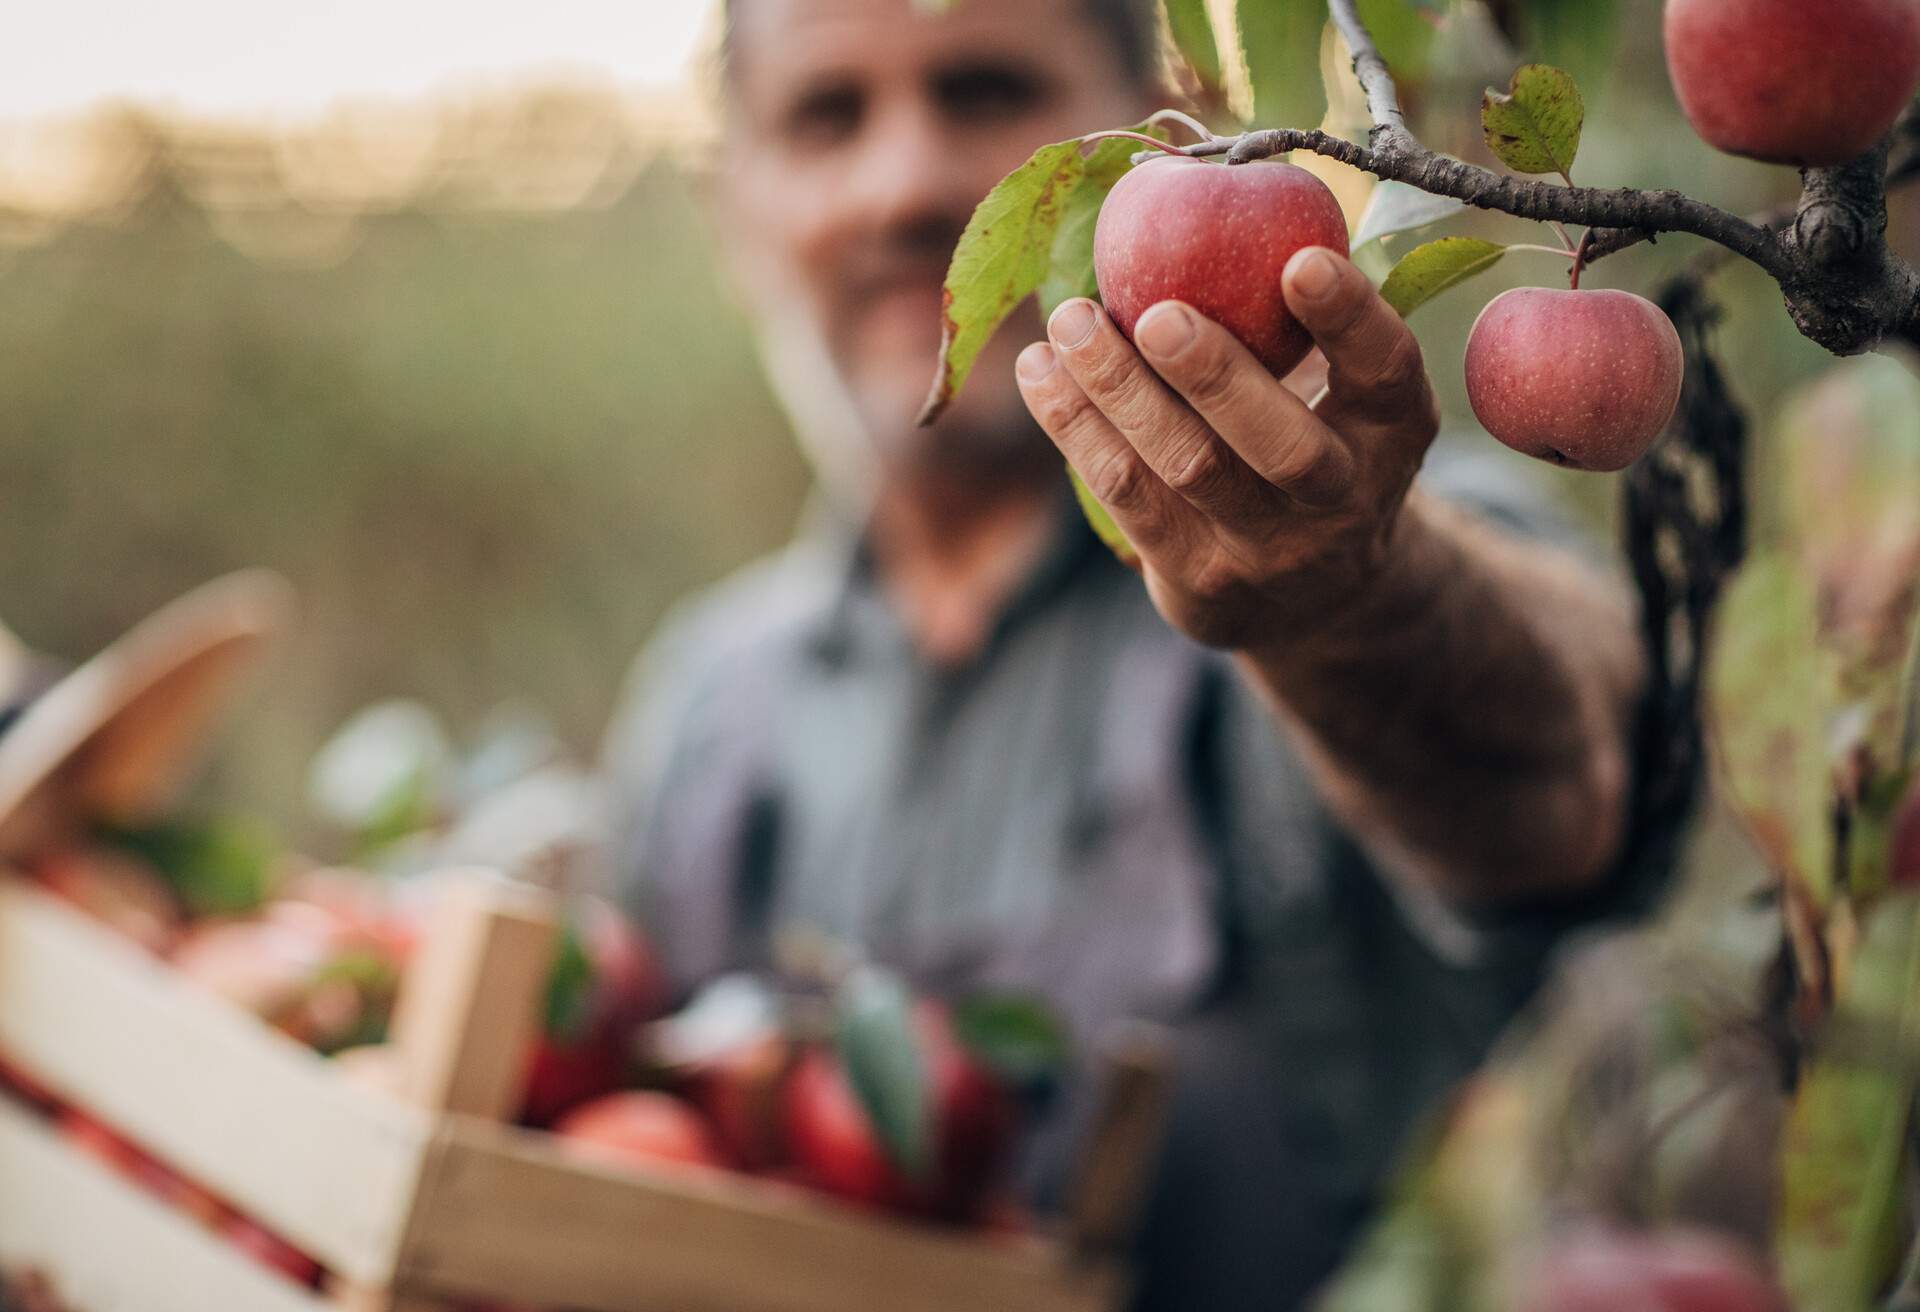 A smiling farmer picks a ripe apple